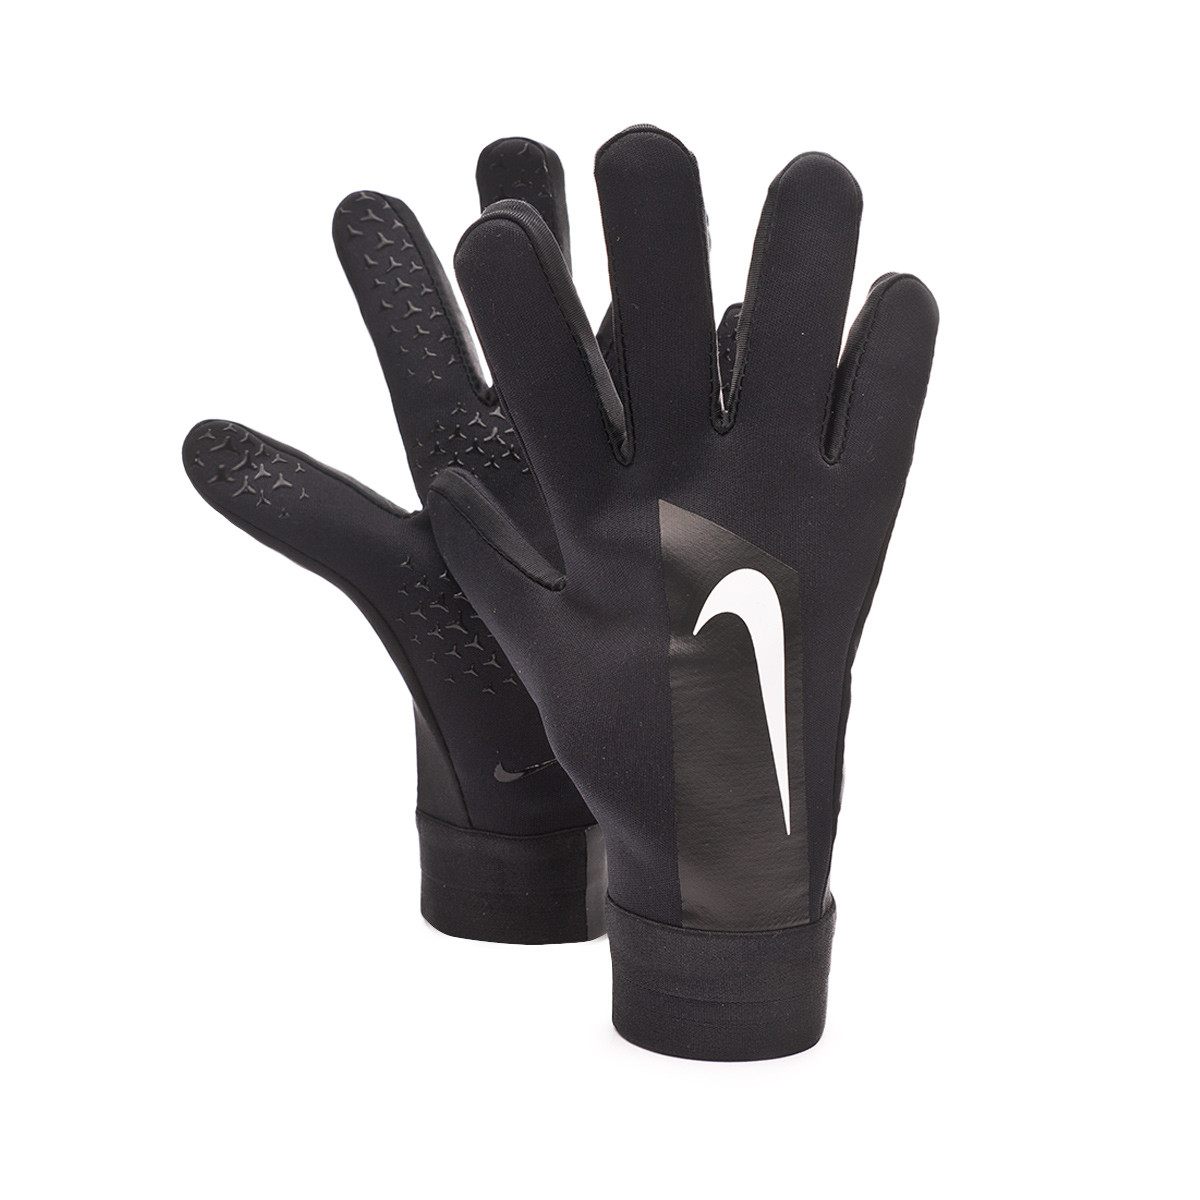 nike hyperwarm academy soccer gloves